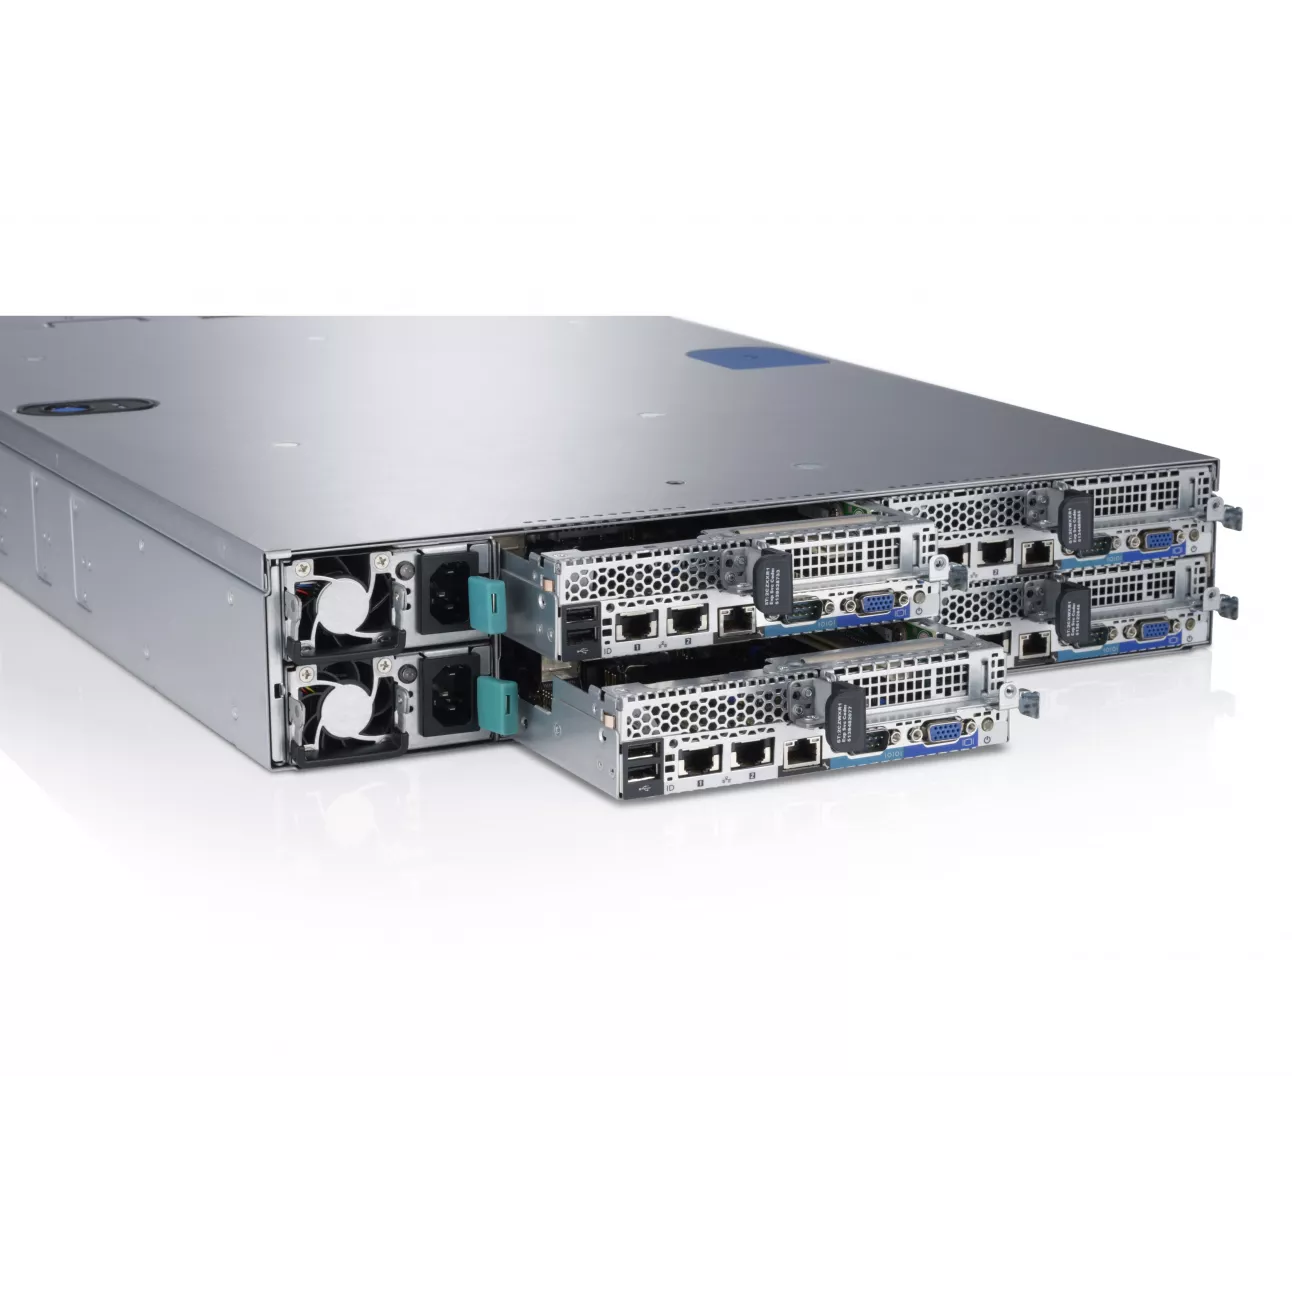 Сервер Dell PowerEdge C6220, 8 процессоров Intel Xeon 8C E5-2680 2.70GHz, 256GB DRAM, 24 отсека под HDD 2.5"